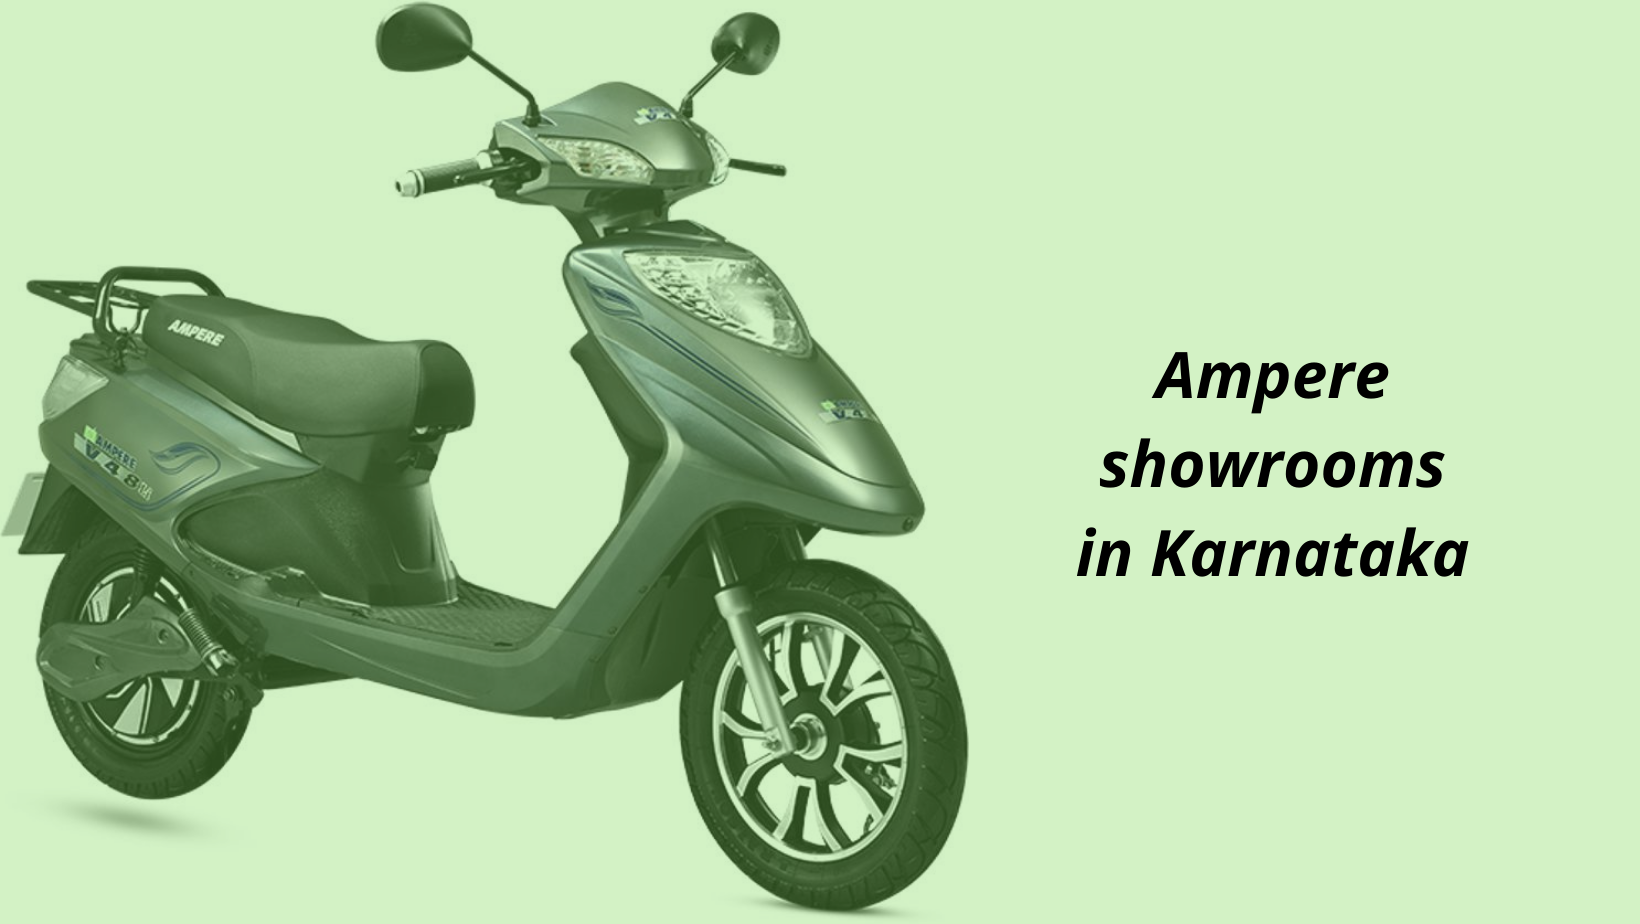 Ampere showrooms in Karnataka